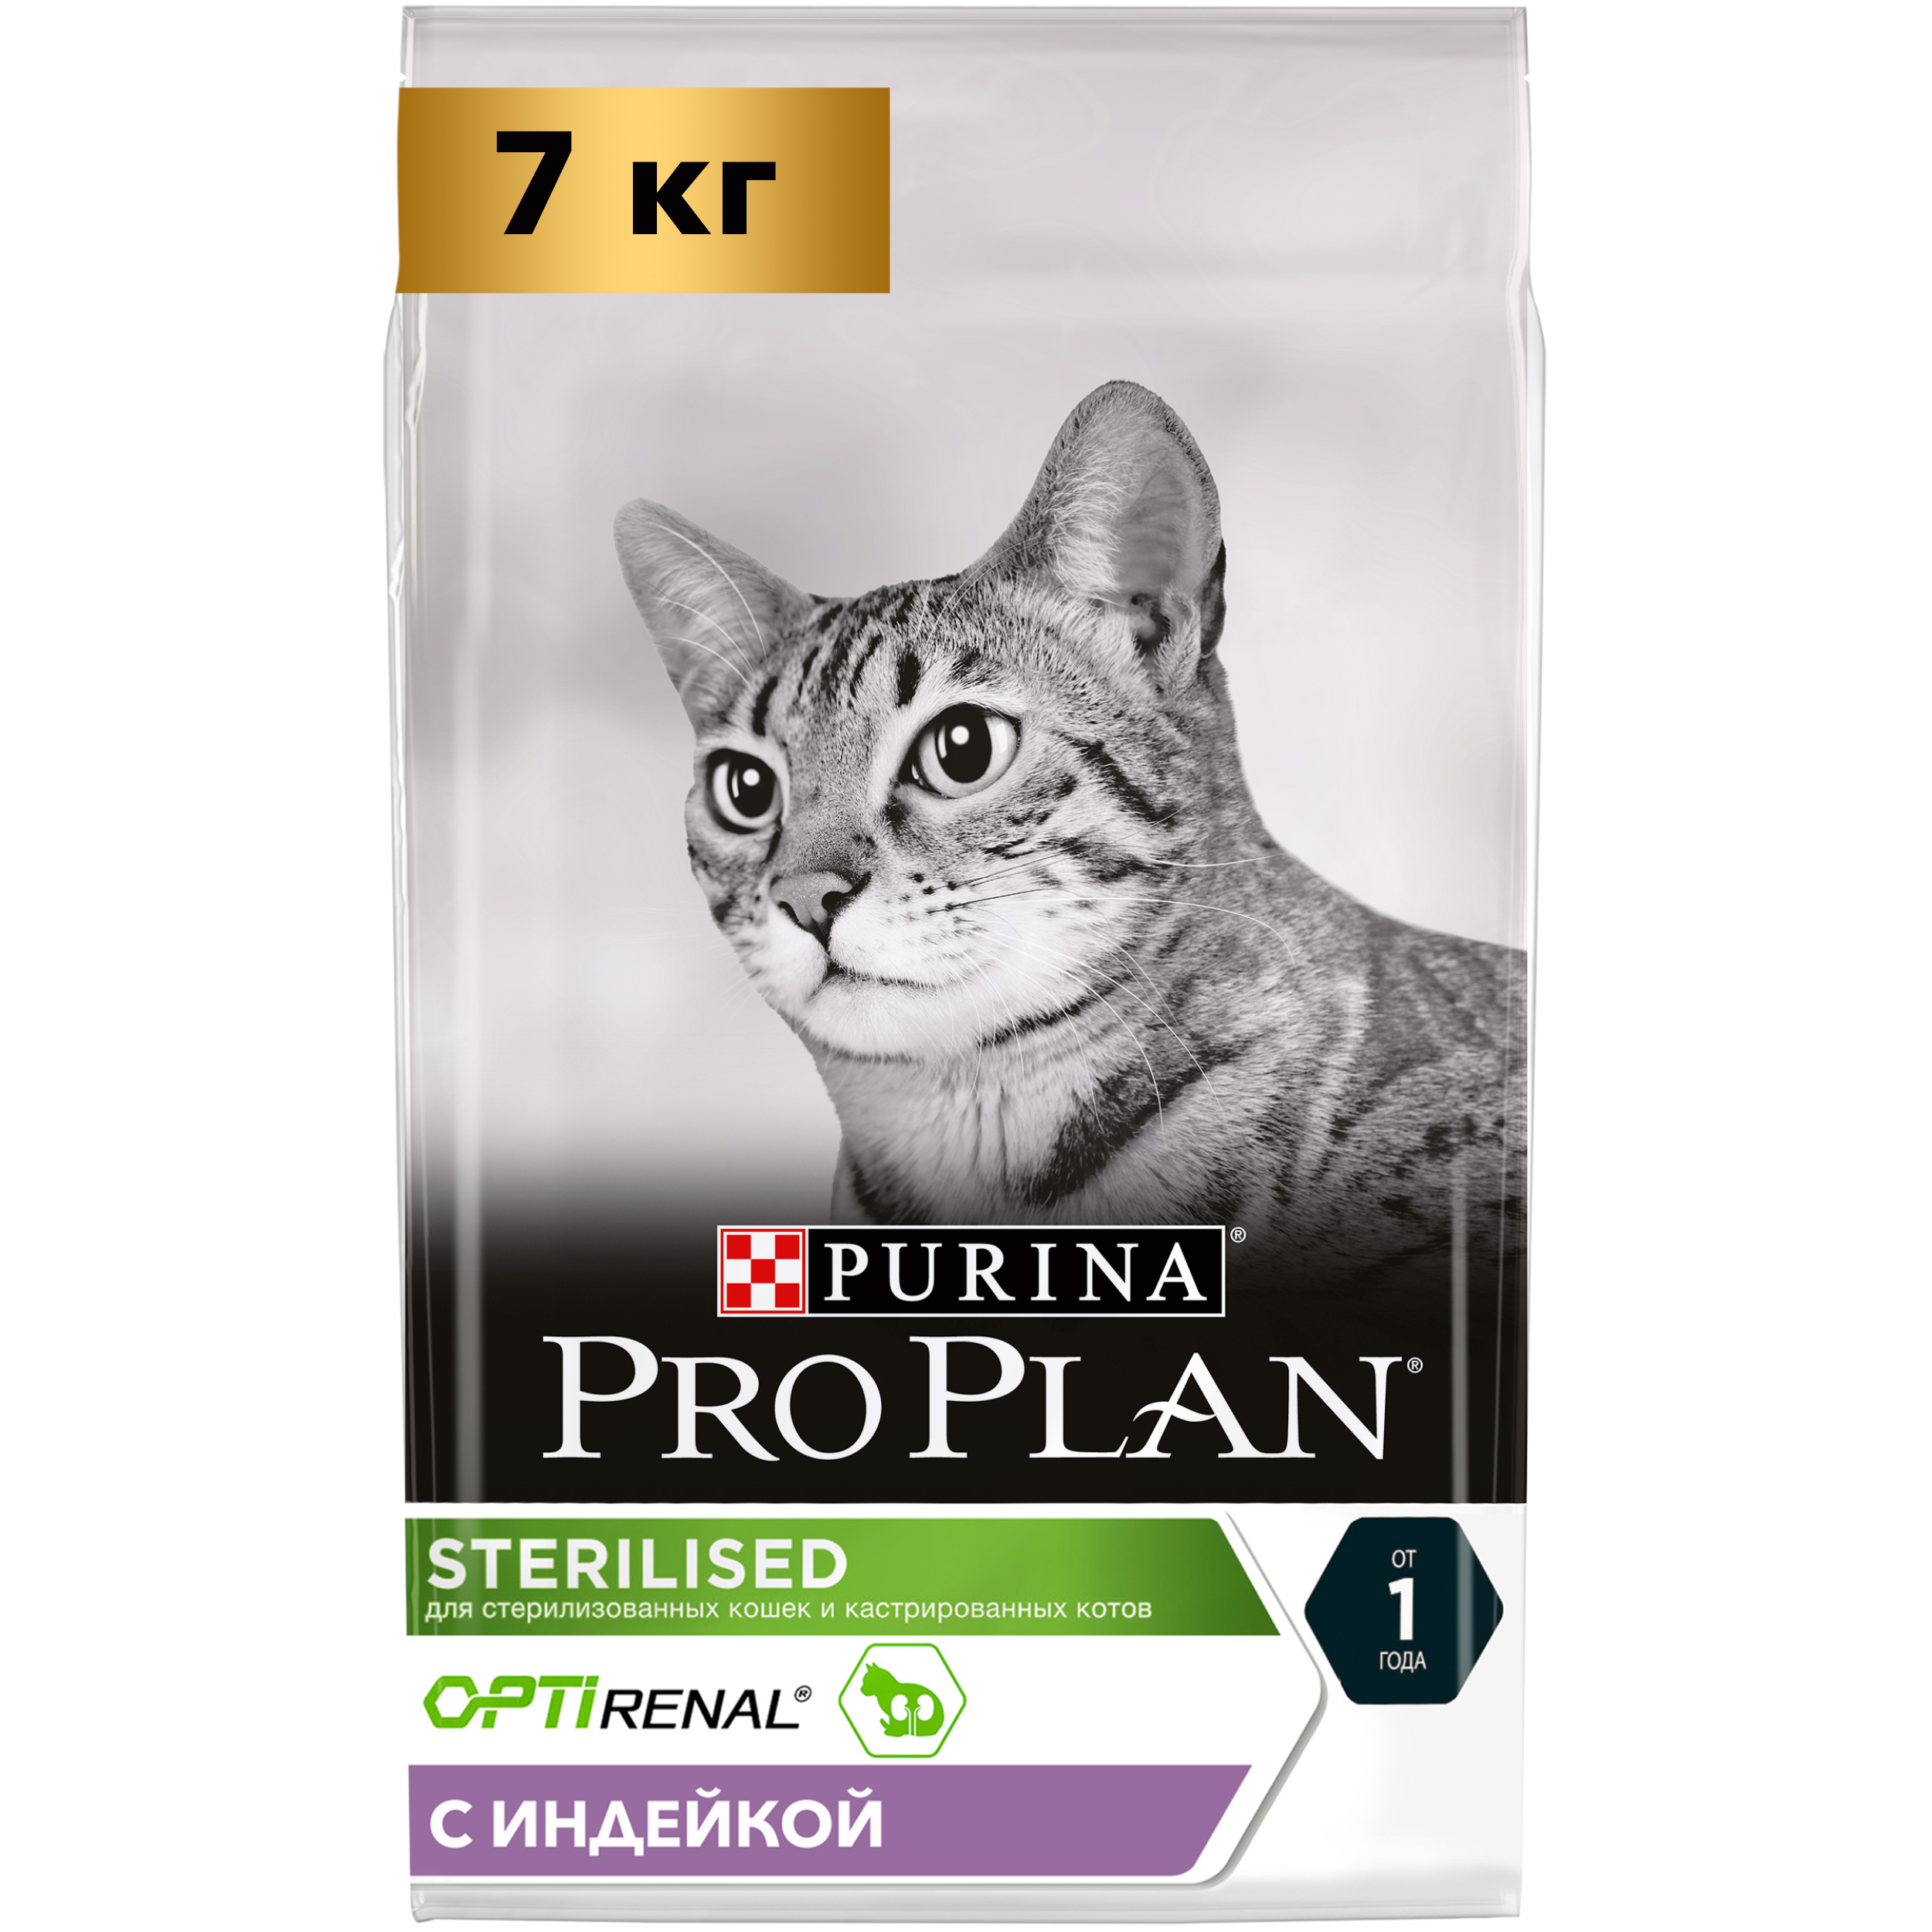 фото Сухой корм для кошек pro plan sterilised optirenal, для стерилизованных, индейка, 7 кг